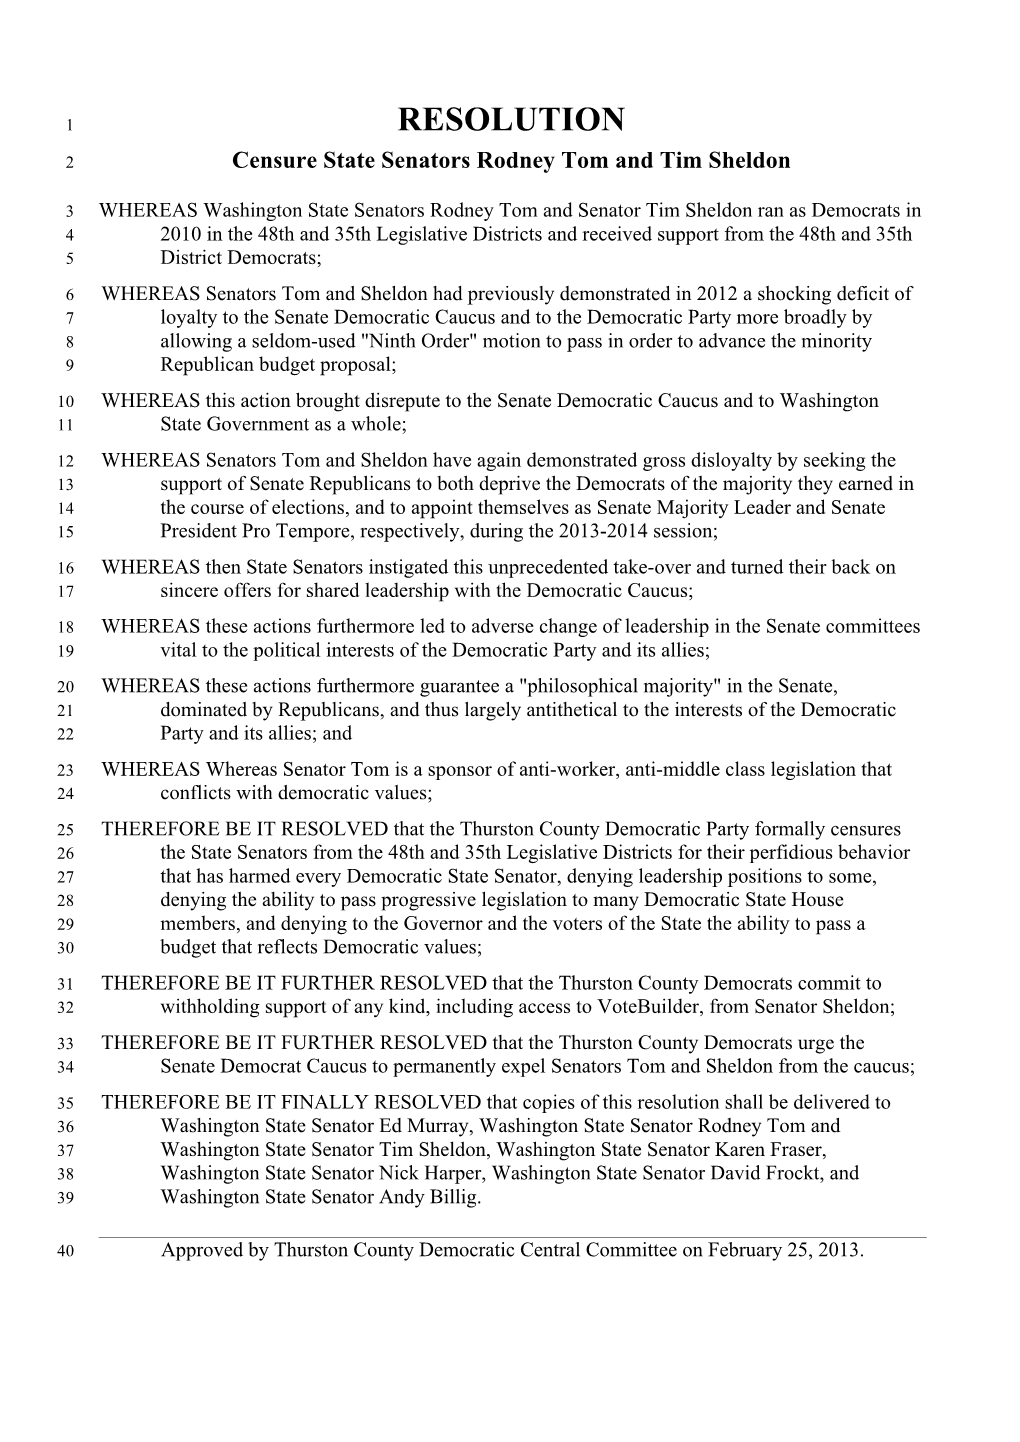 Resolution to Censure State Senators Rodaney Tom and Tim Sheldon